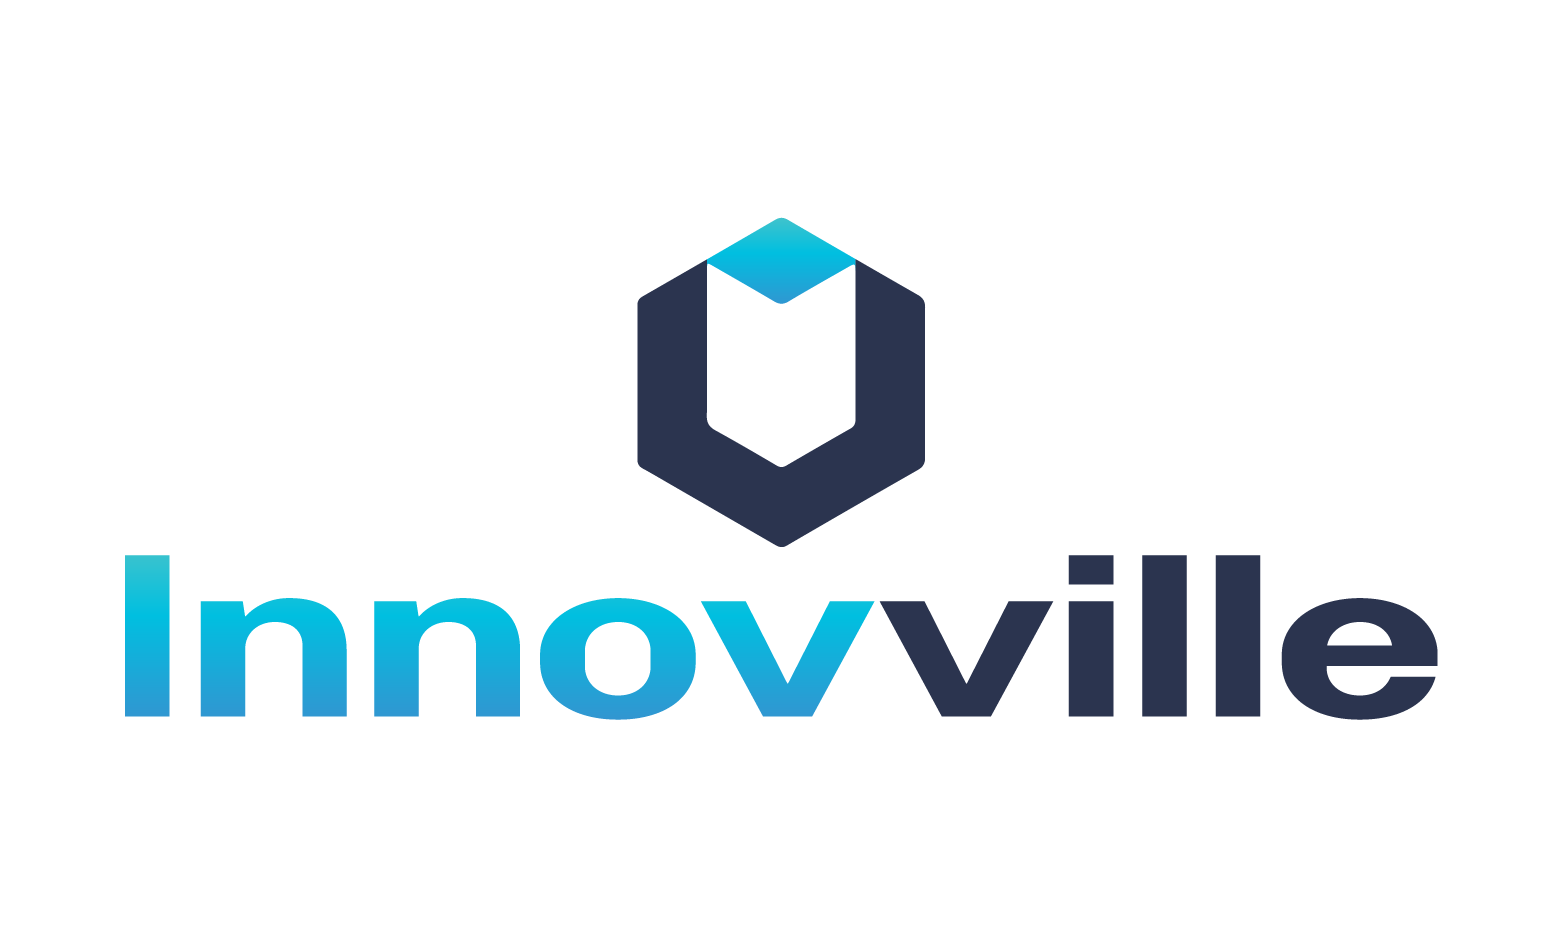 Innovville.com - Creative brandable domain for sale